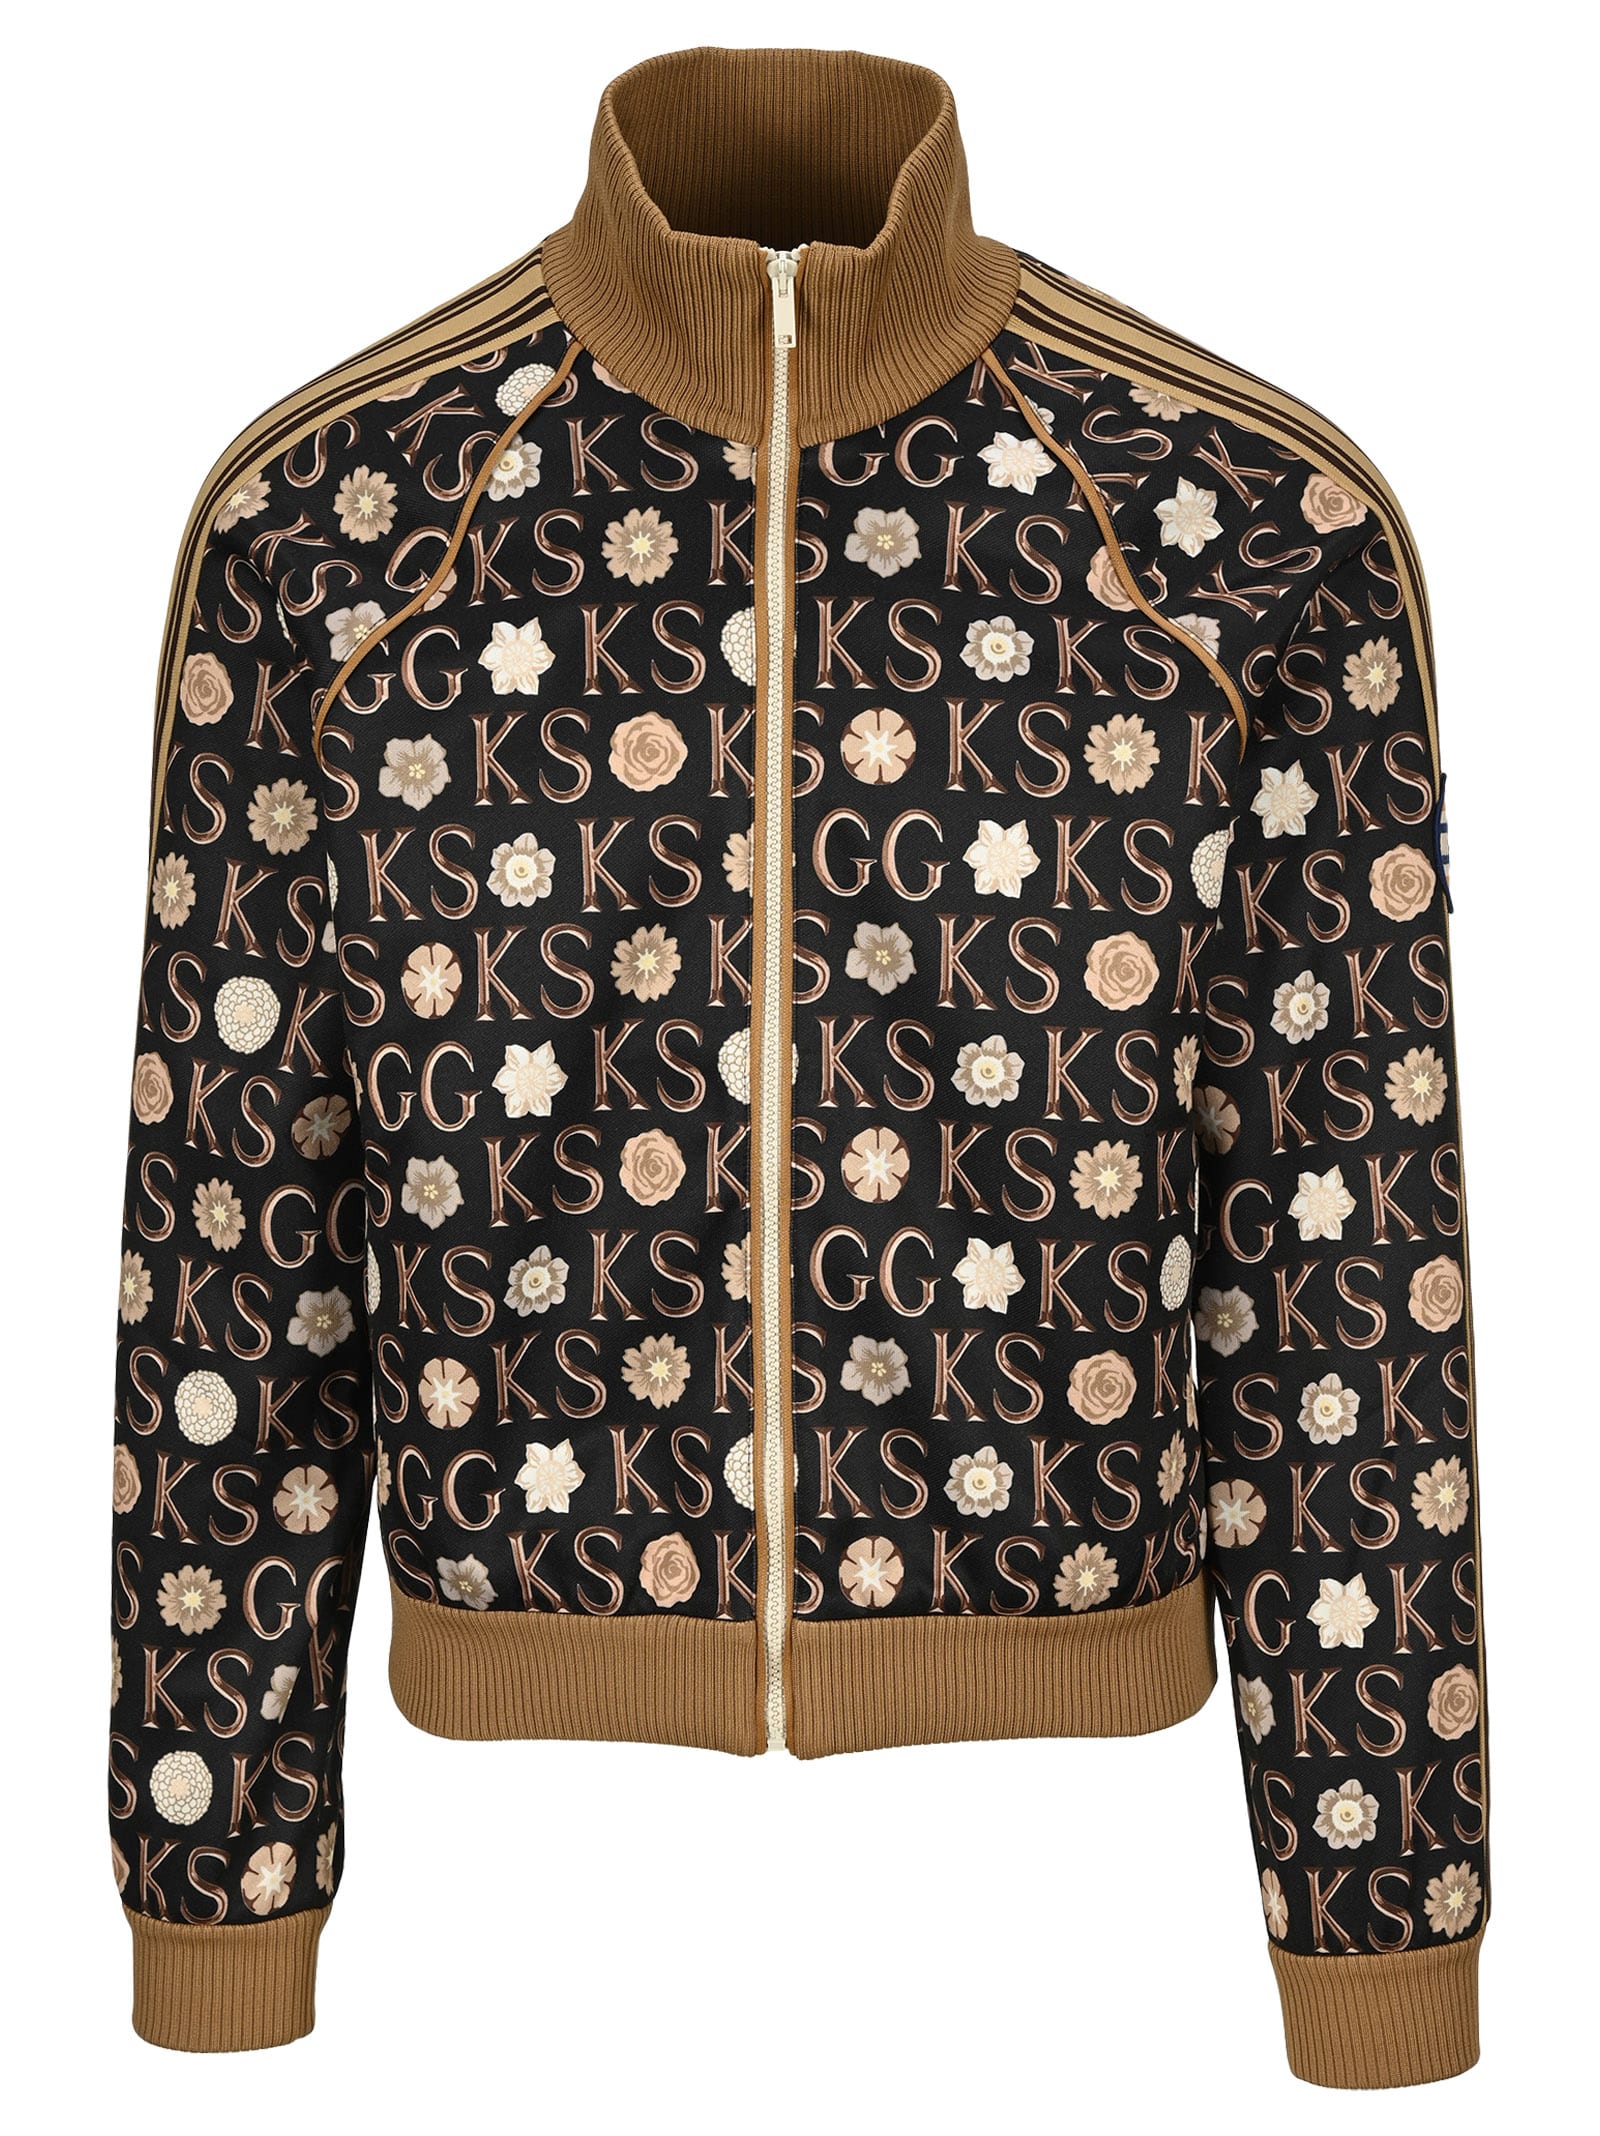 Gucci Ken Scott X Print Zip-up Jacket